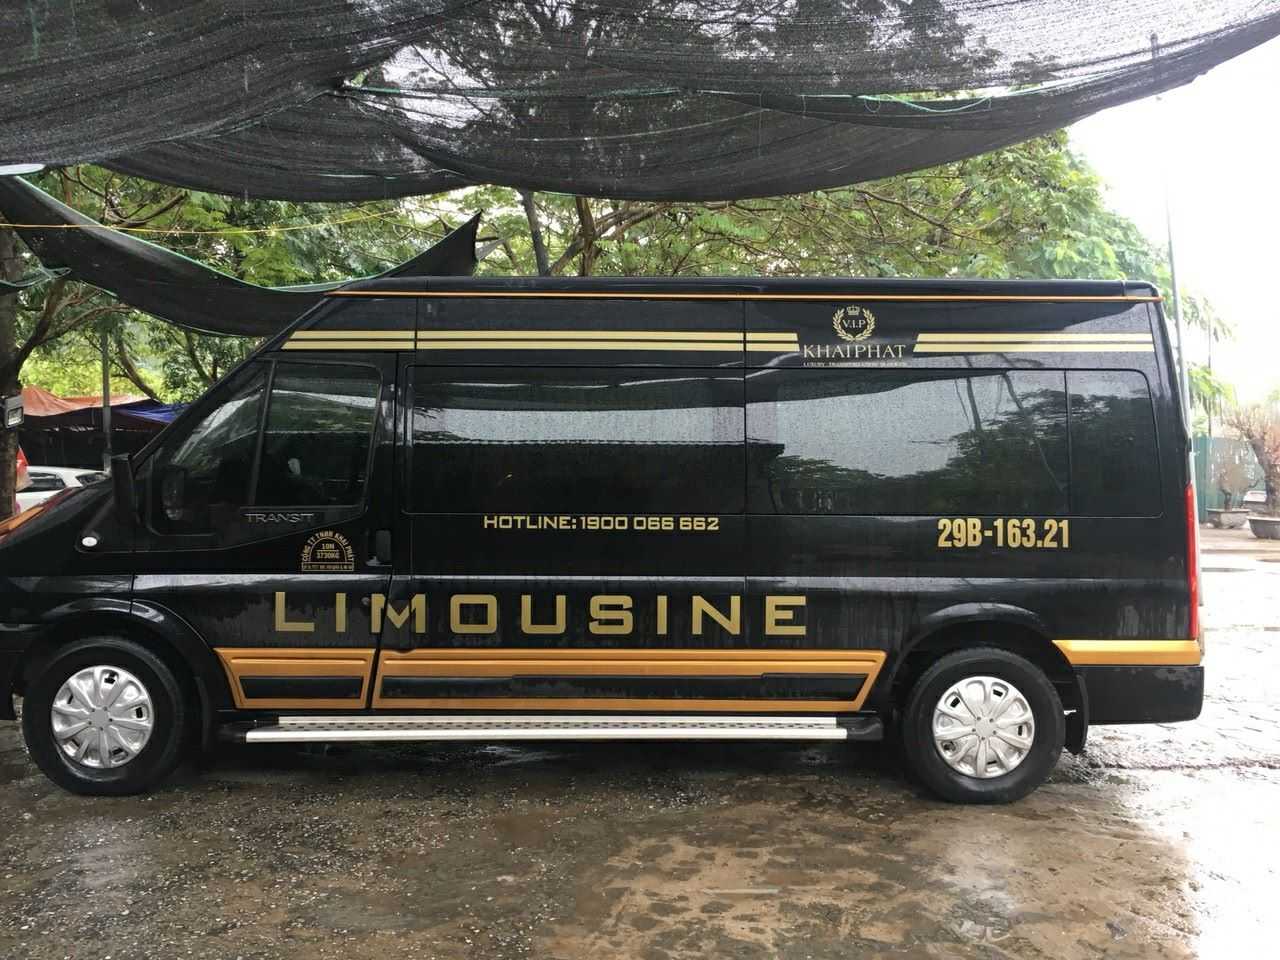 Xe Khai Phát Limousine đi Lào Cai.